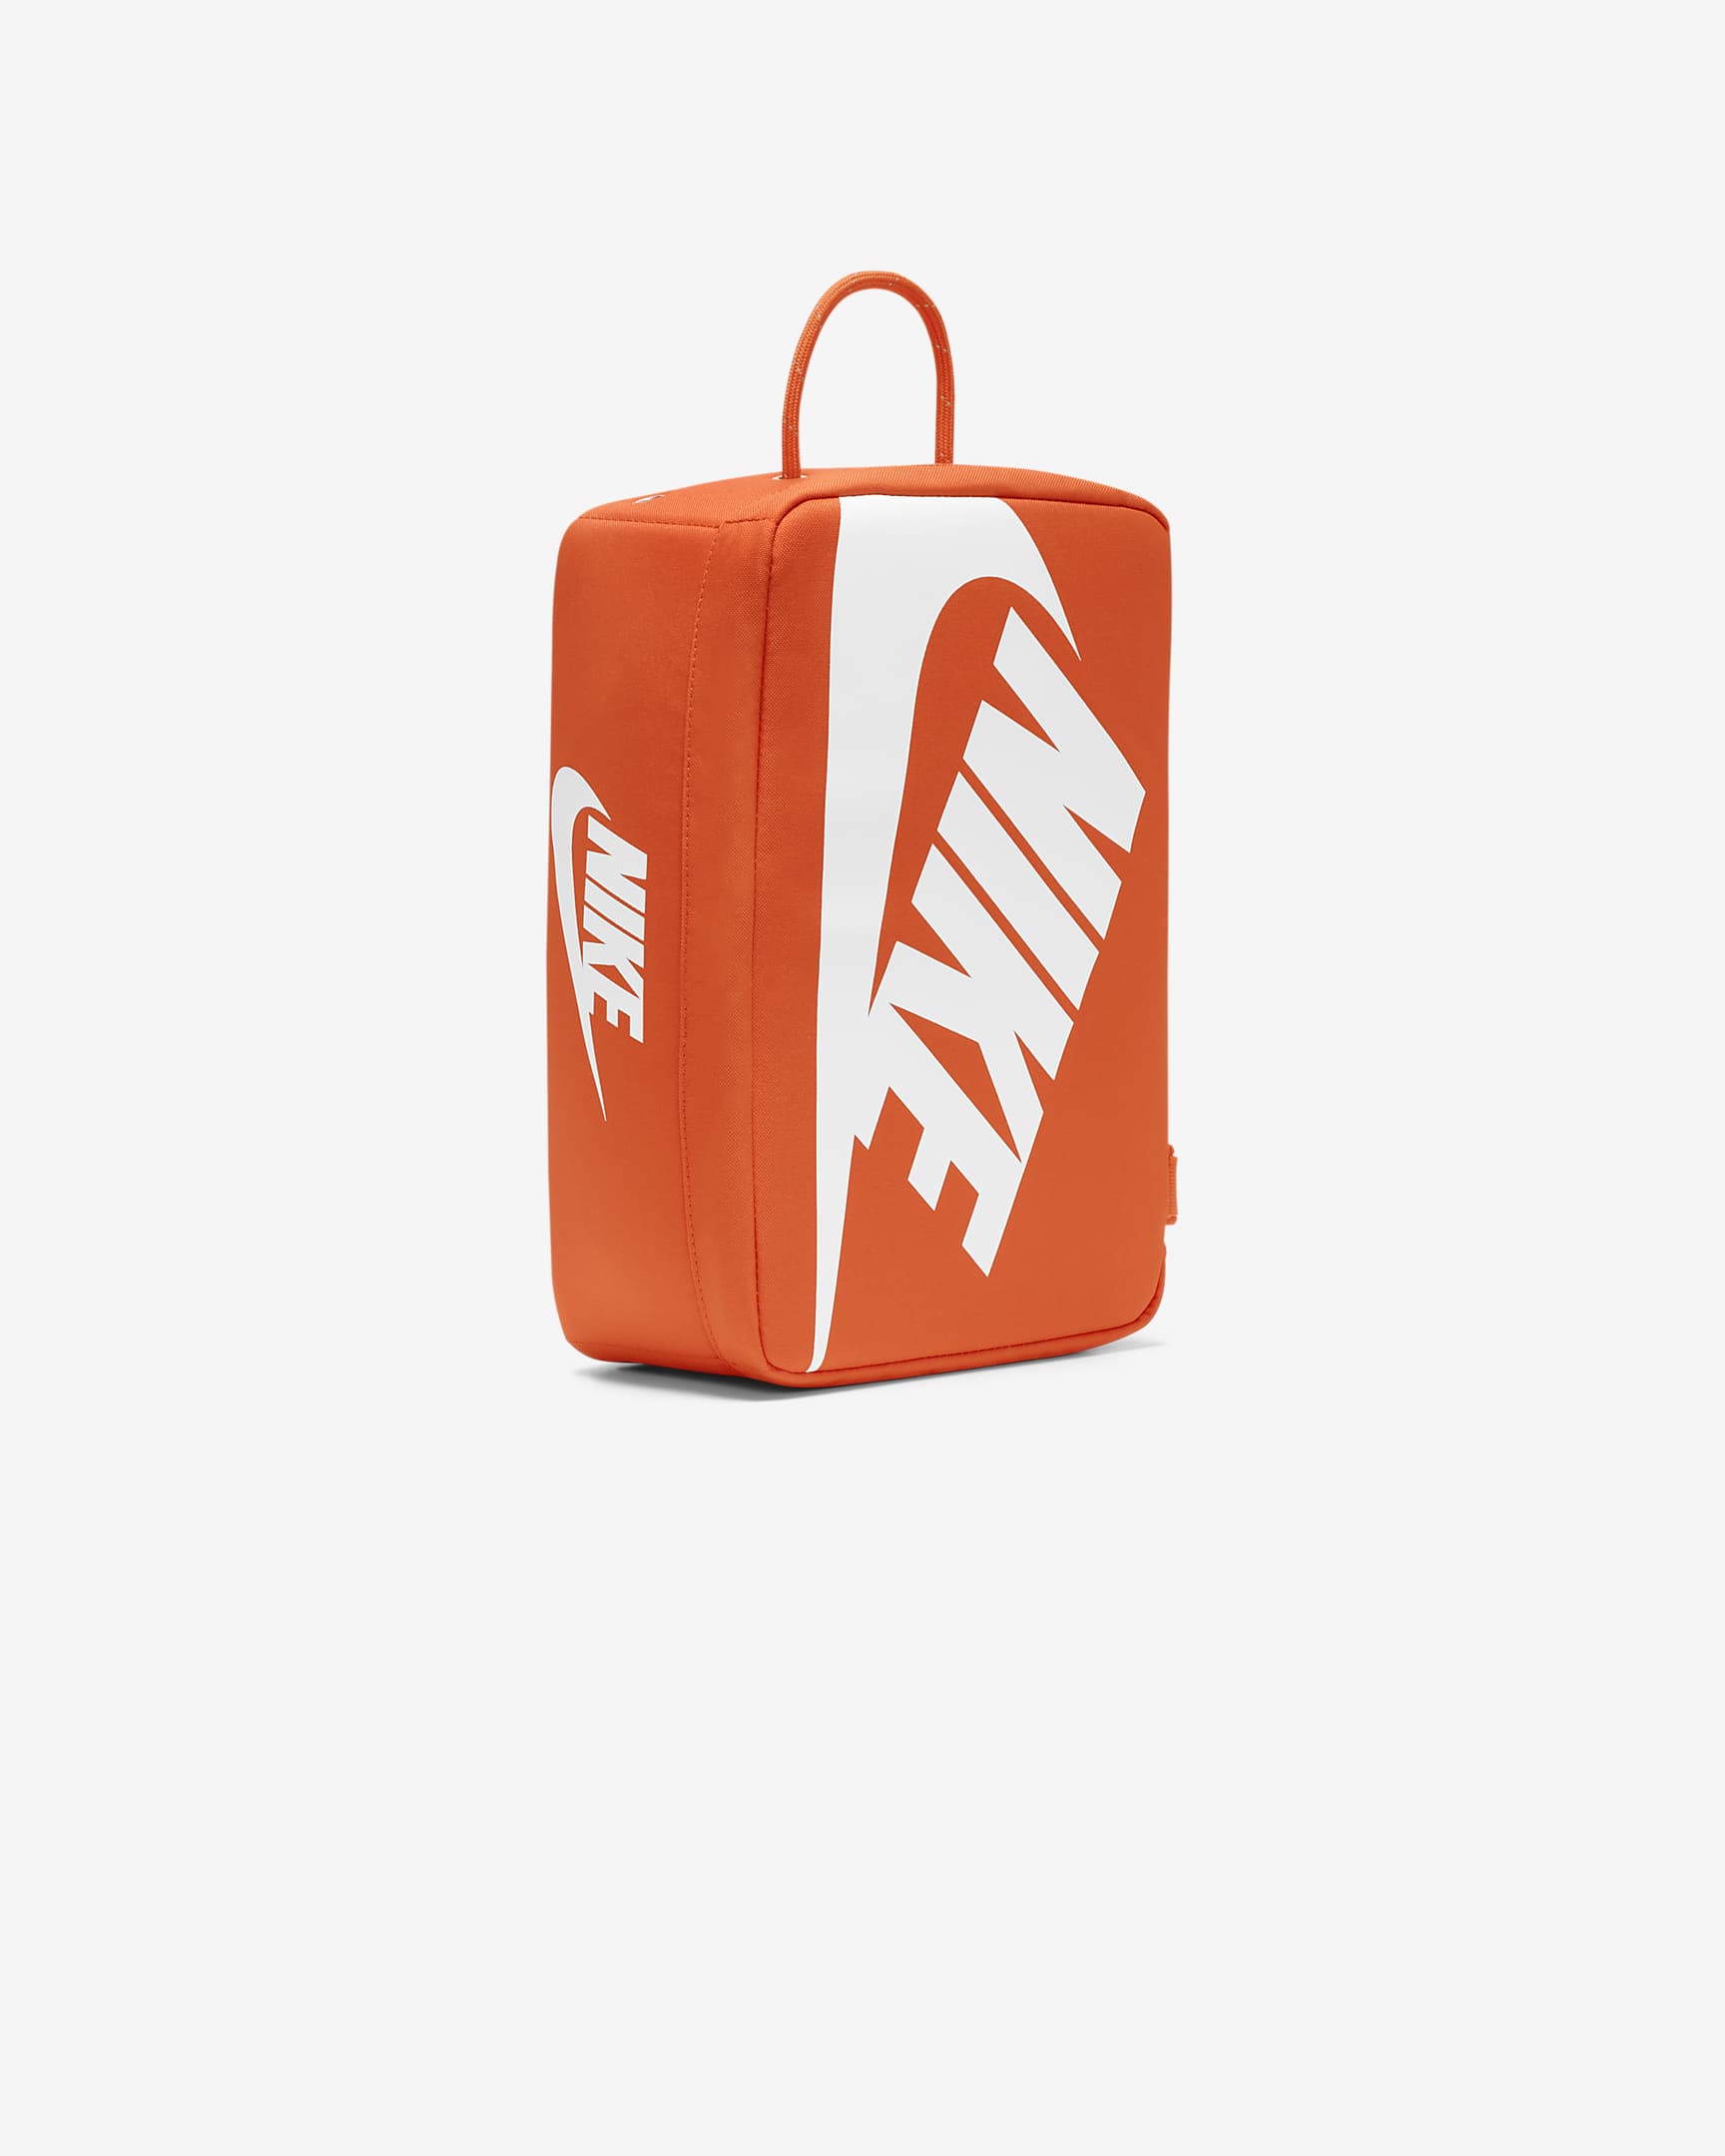 Nike Shoe Box Bag (12L) - Orange/Orange/White